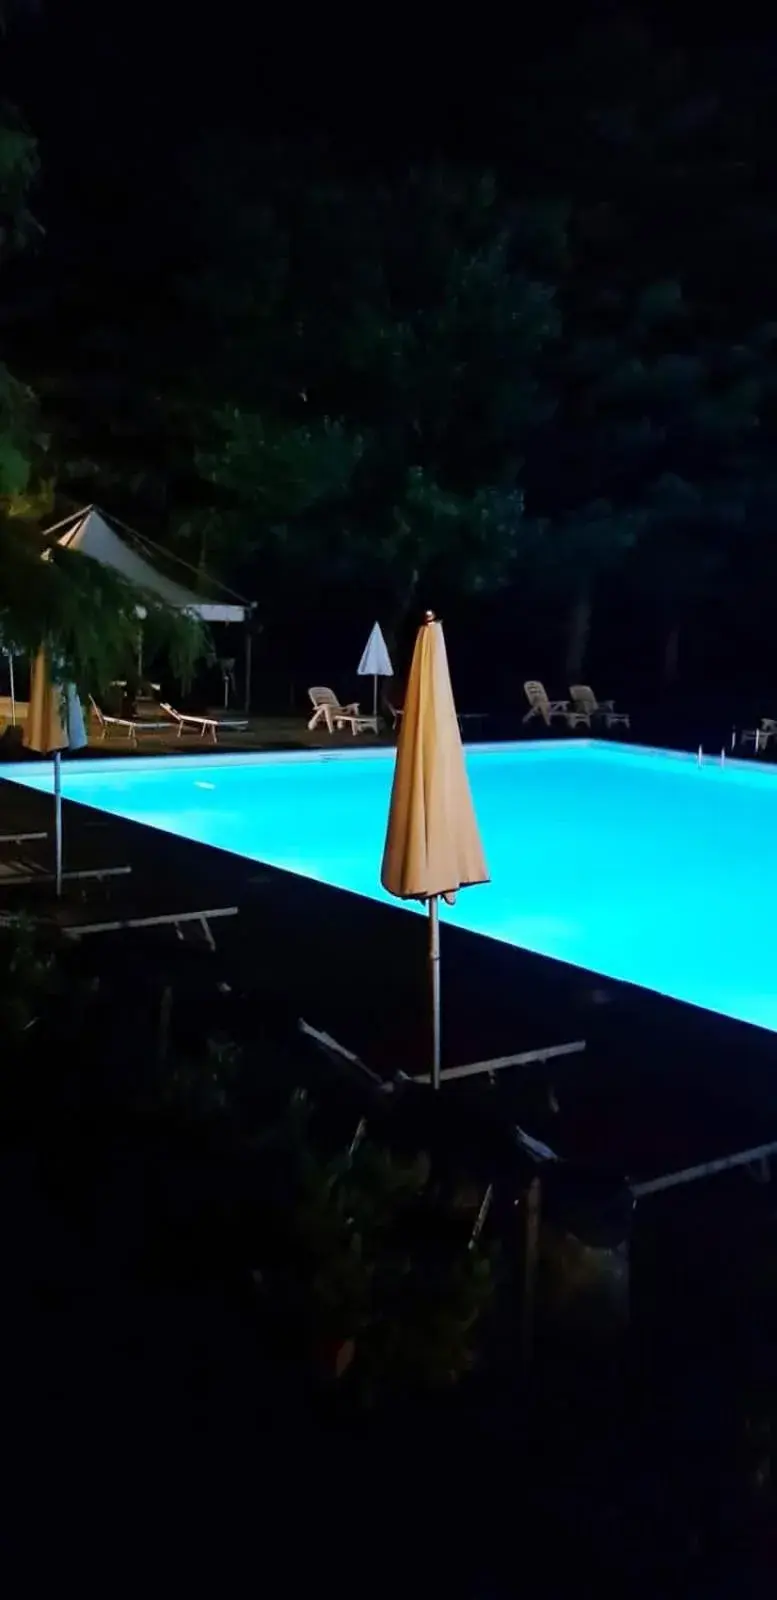 Swimming Pool in Hotel Residence Sant'Uberto